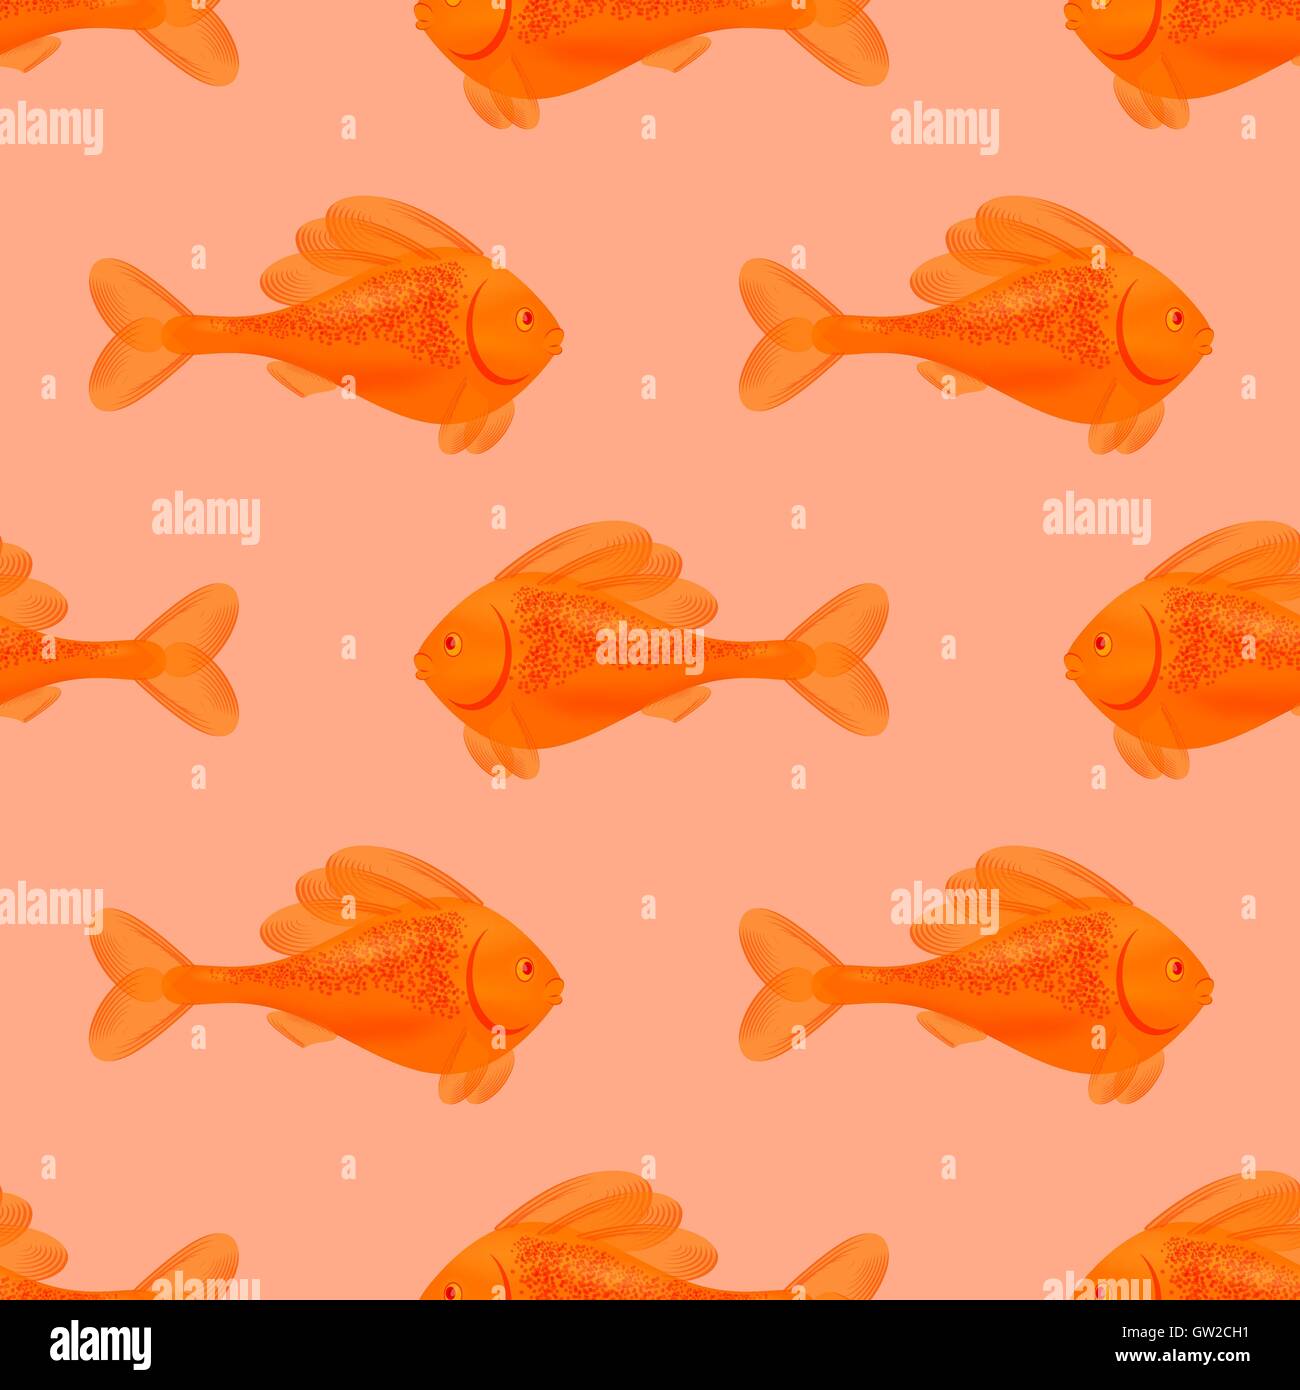 Seamless Orange Fish Pattern Stock Vector